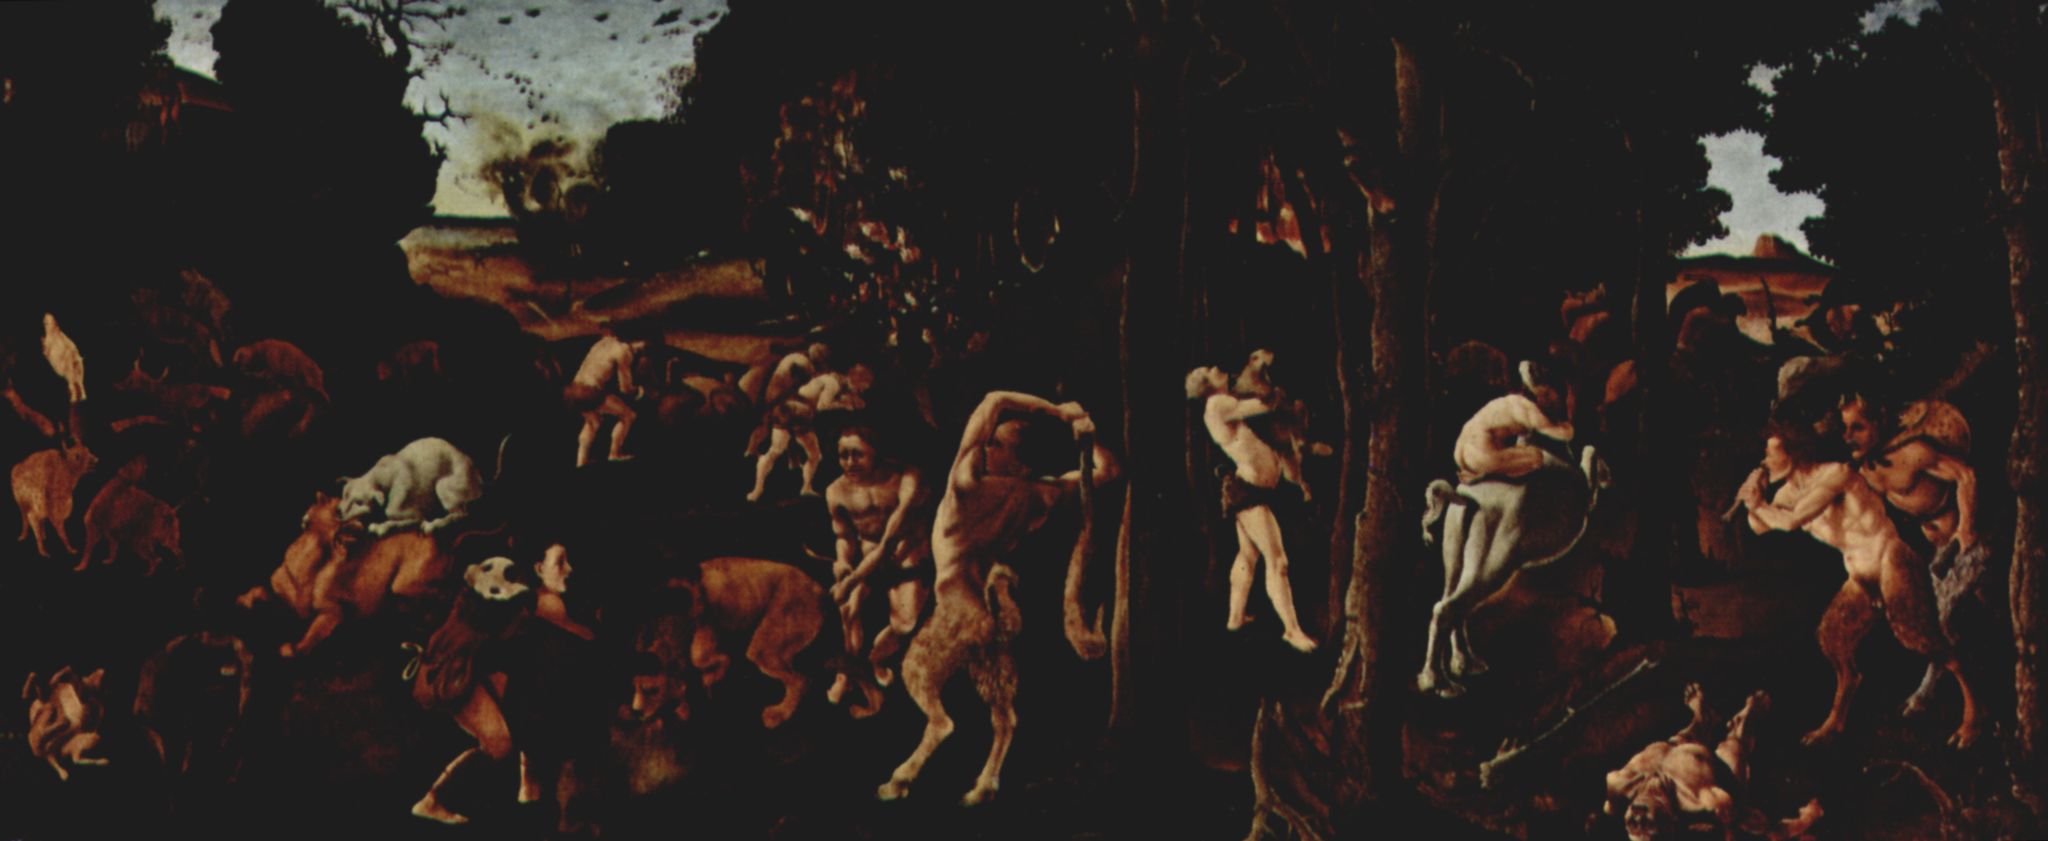 Piero di Cosimo: Bildfolge zur Frhgeschichte der Menschheit, Szene: Jagdszene